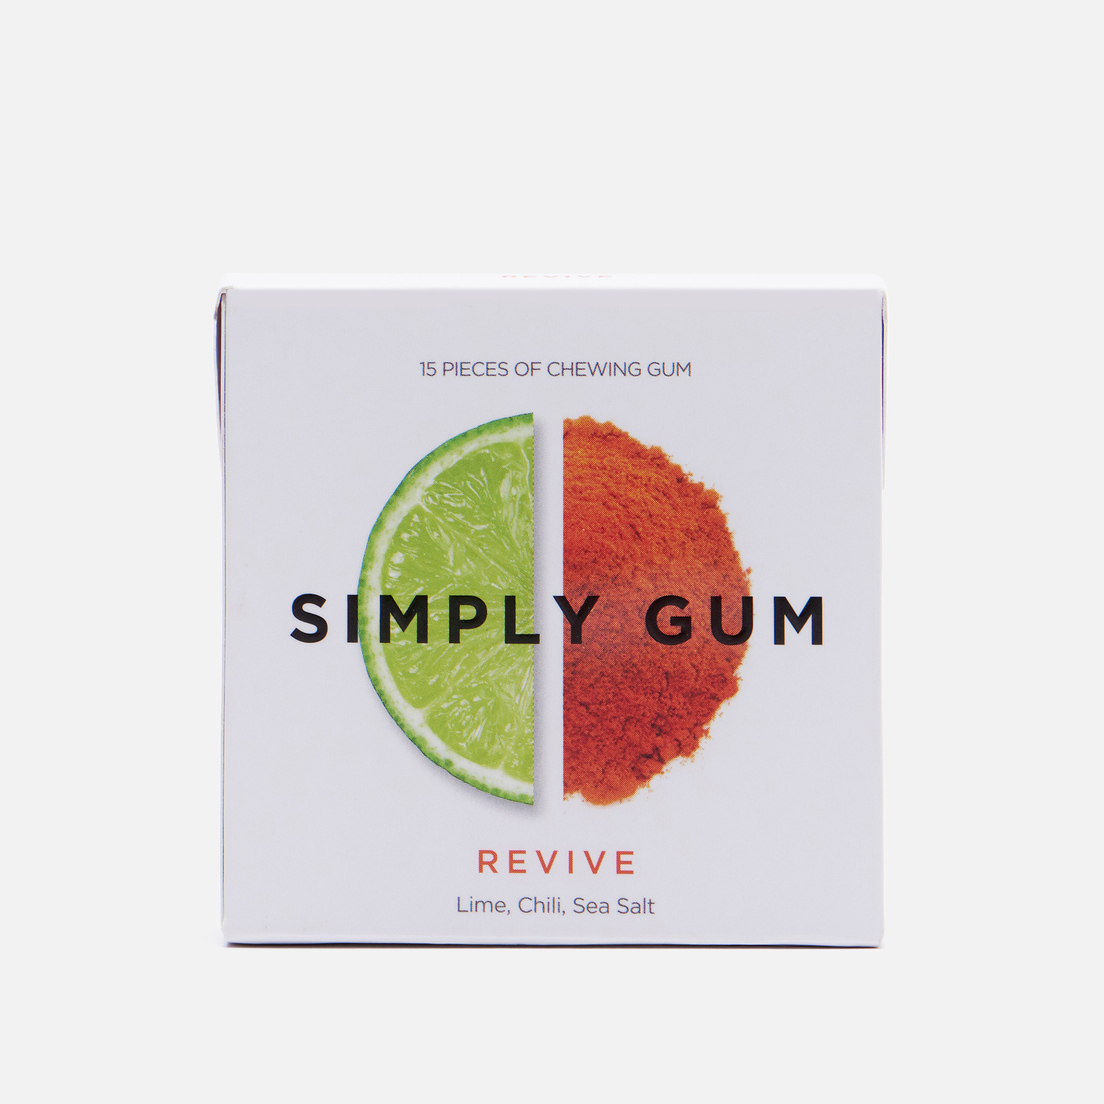 Simply gum. Simply Gum Revive. Simply Gum купить. Вкусняшка simply Gum.